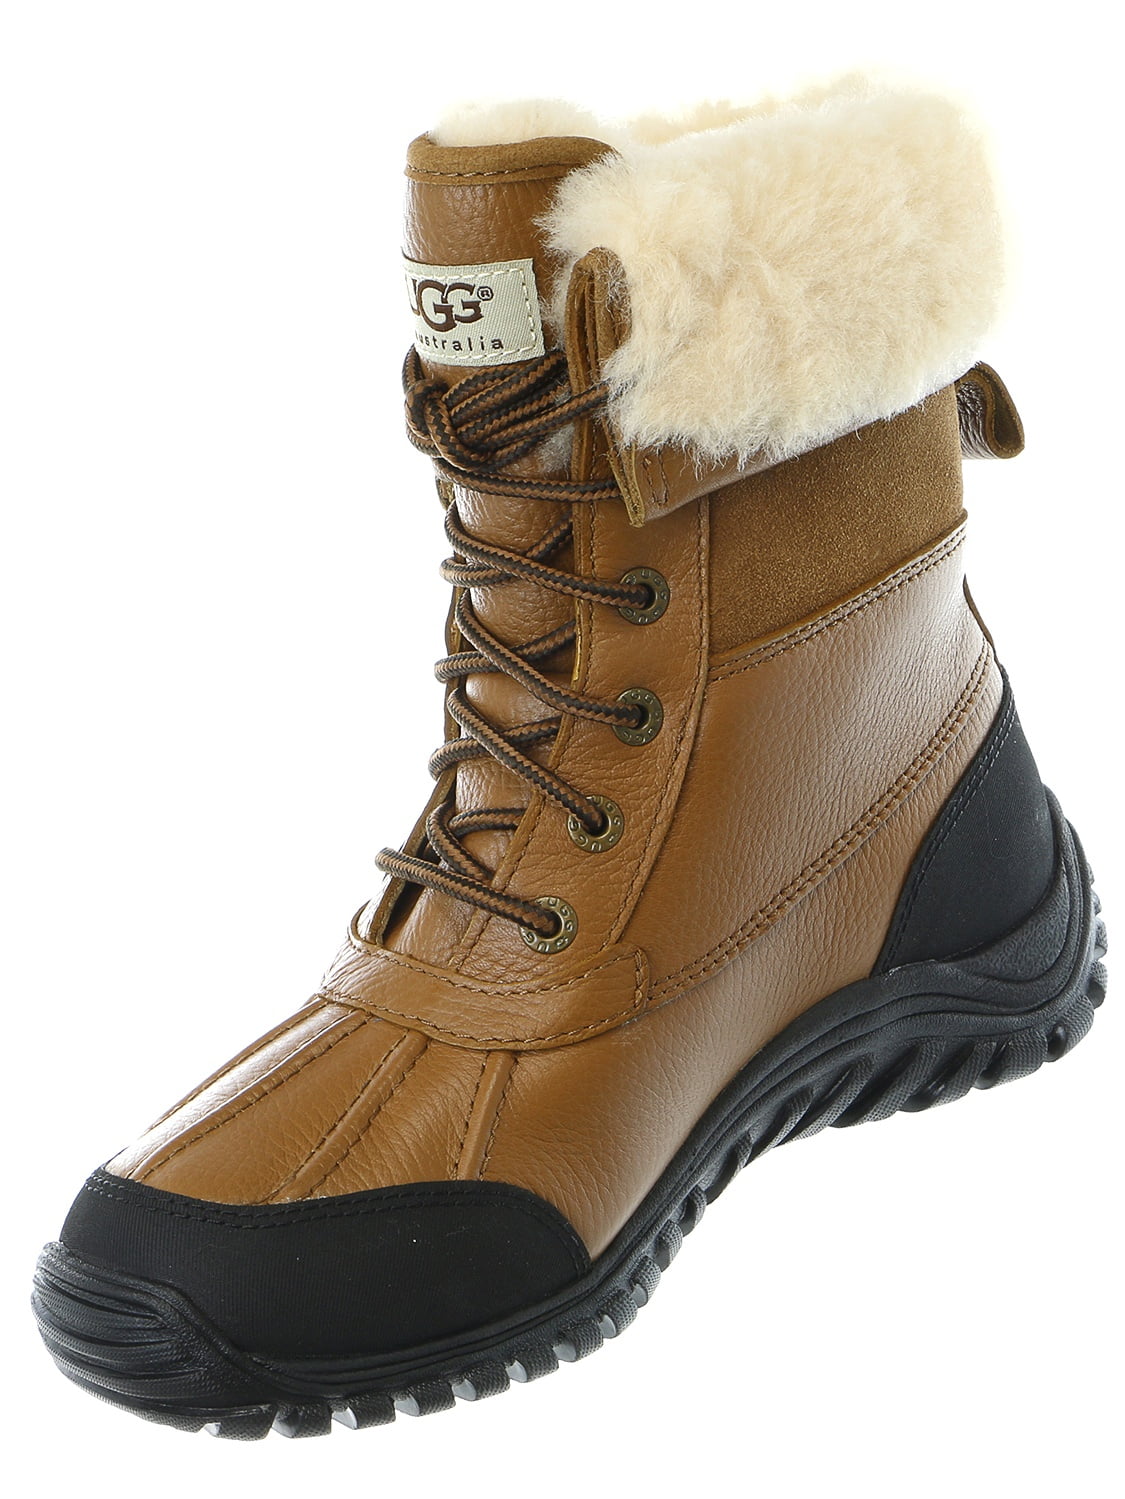 ugg women's adirondack ii winter boot, otter, 6.5 b us - Walmart.com